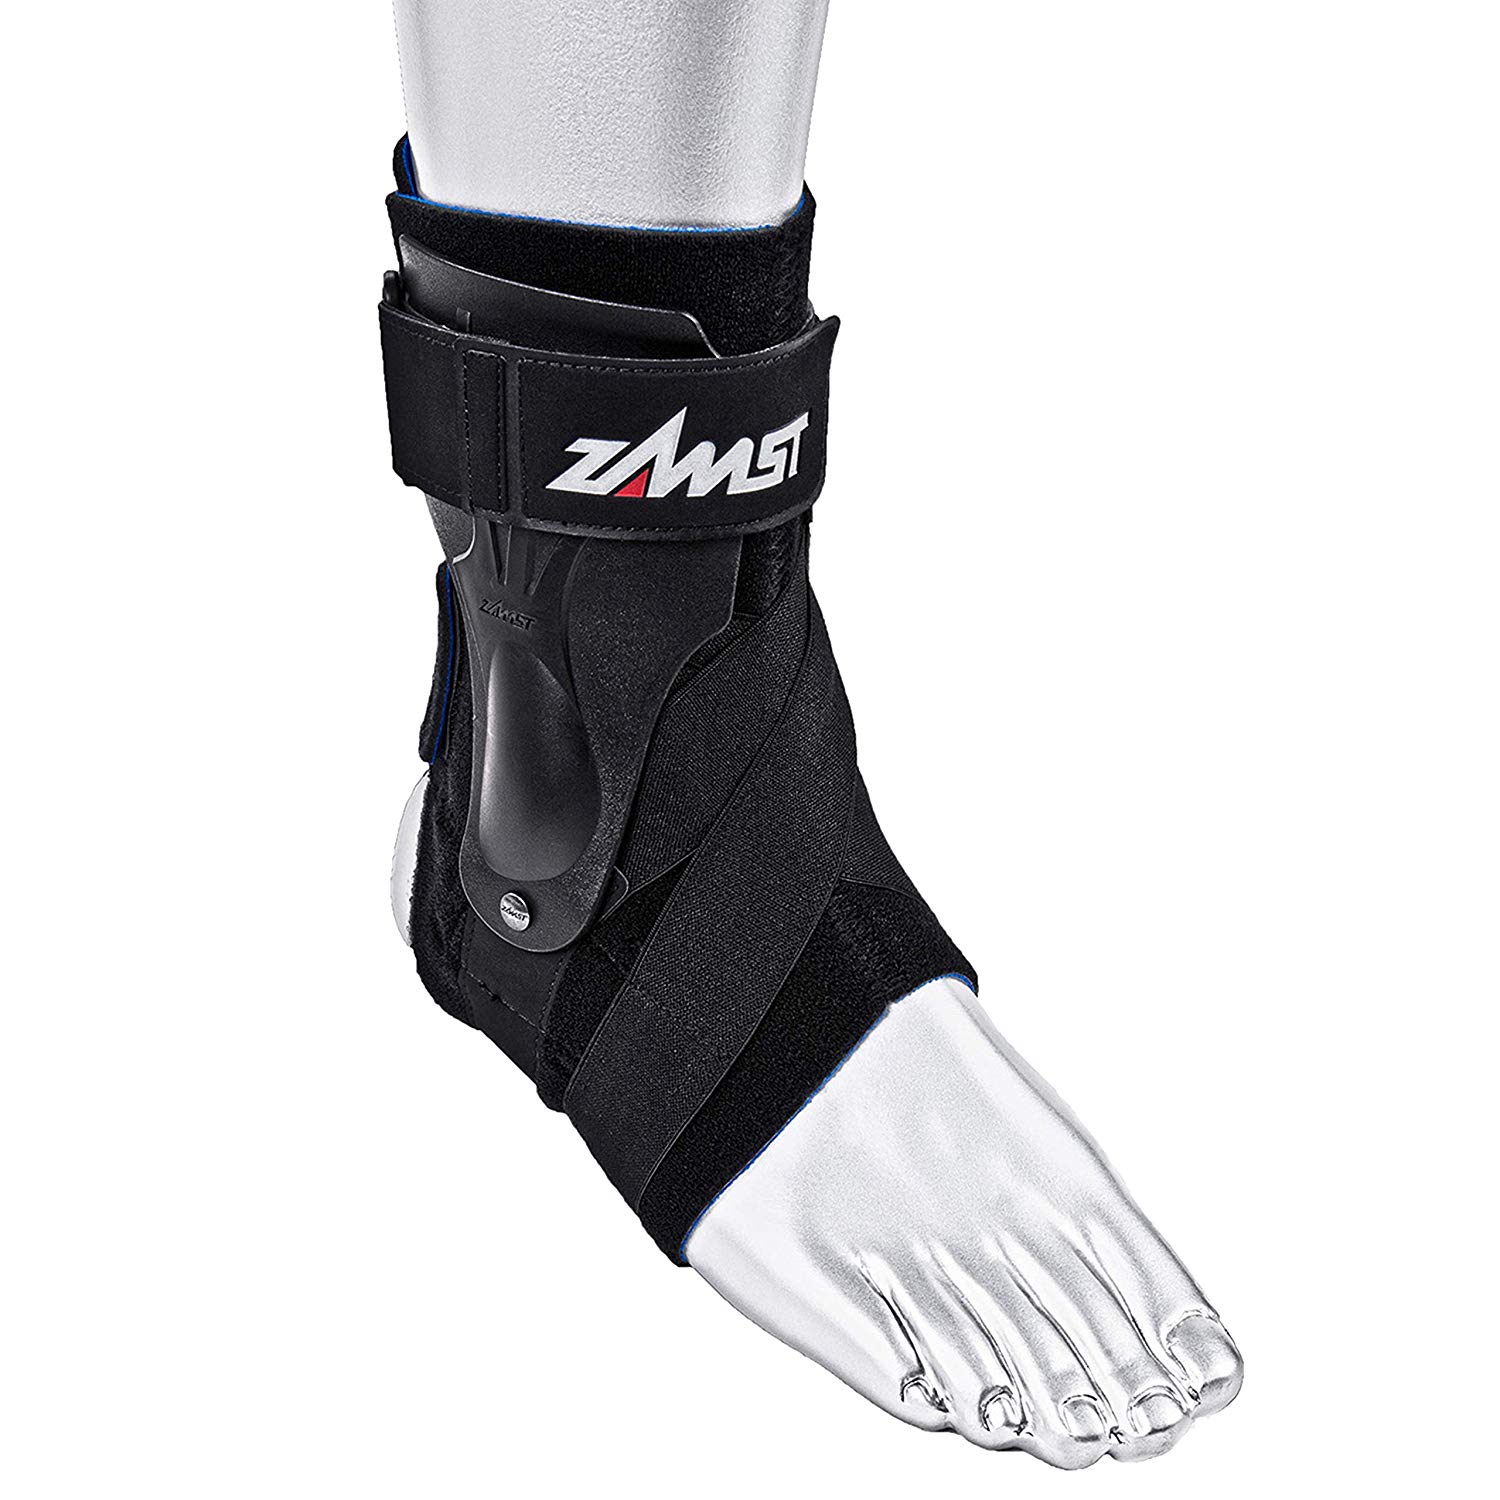 Zamst A2-DX Strong Support Best Basketball Ankle Brace